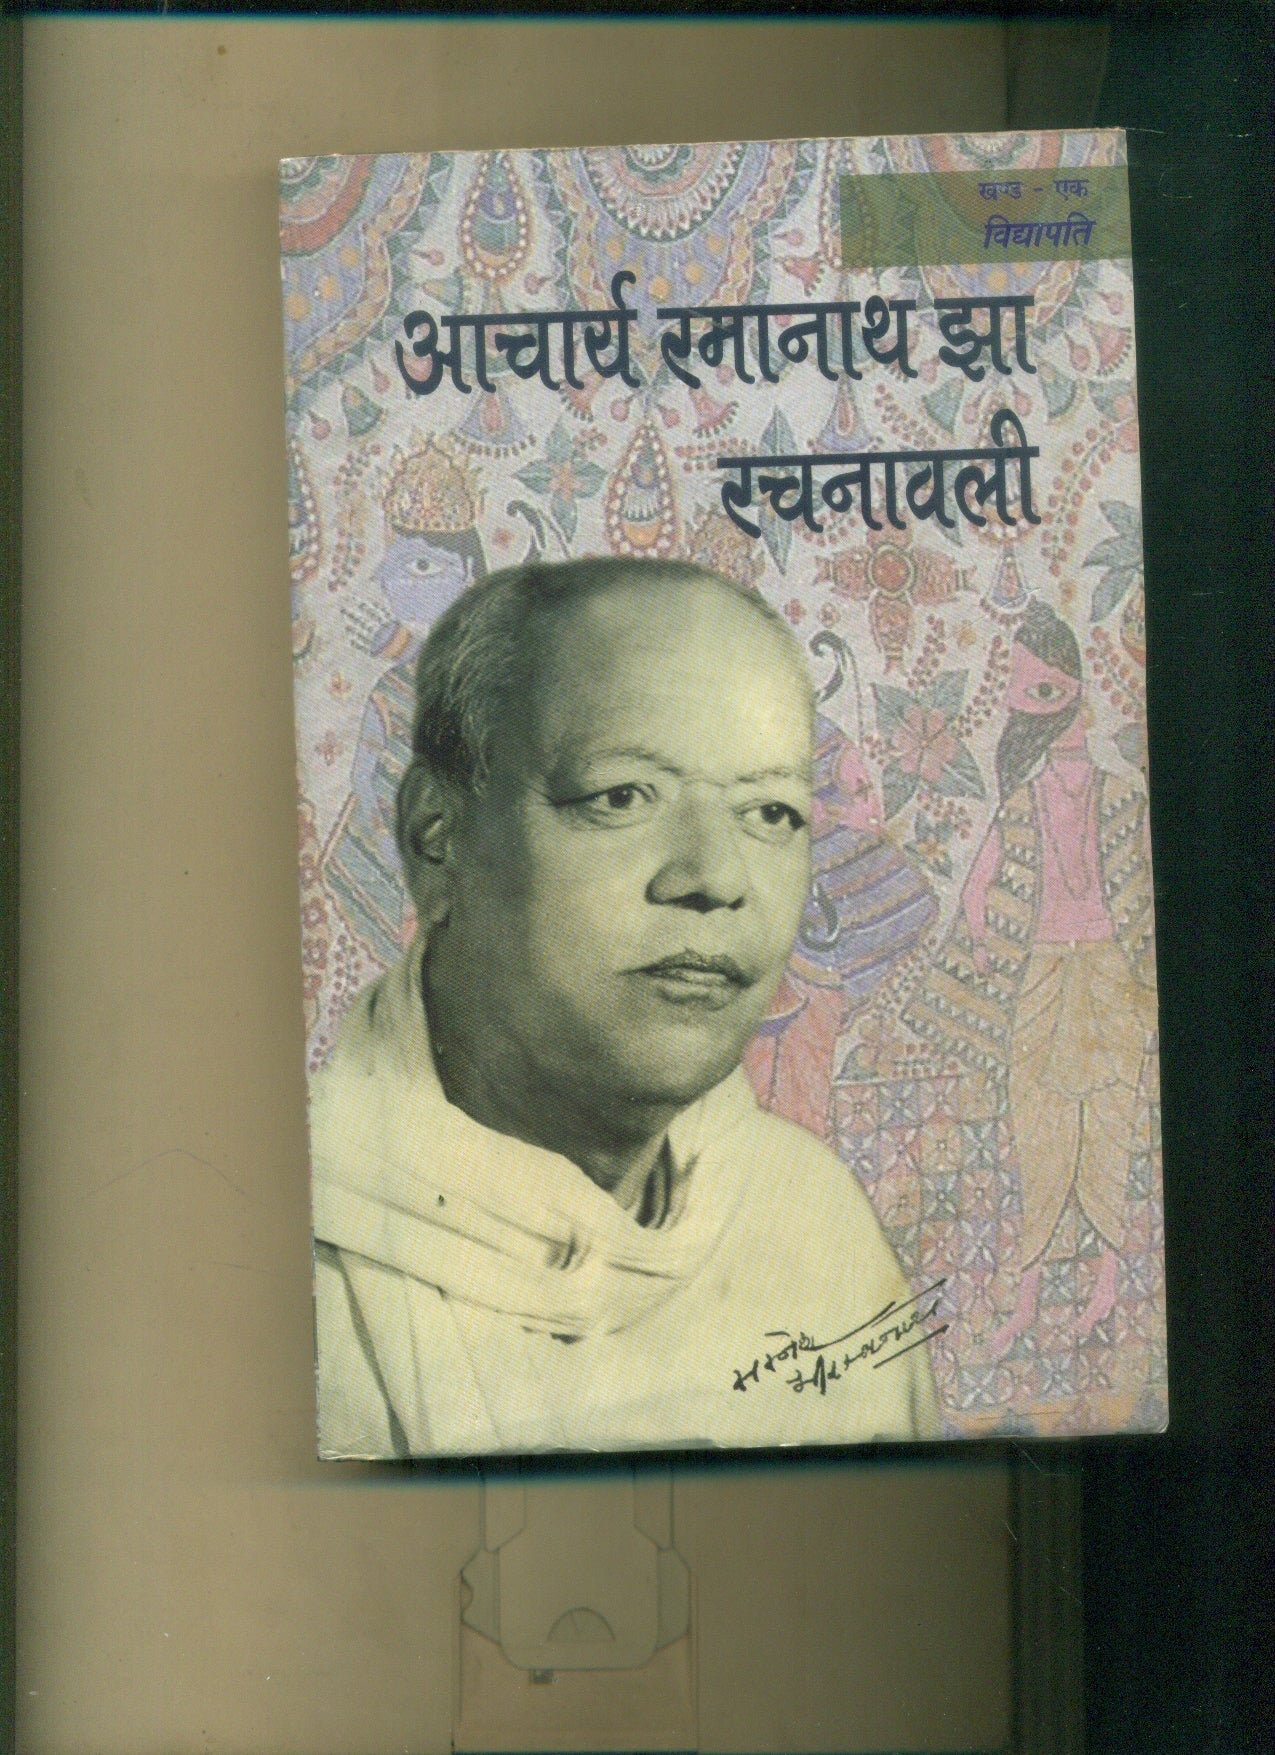 Aacharya Ramanath Jha Rachnawali (5 volume Set)